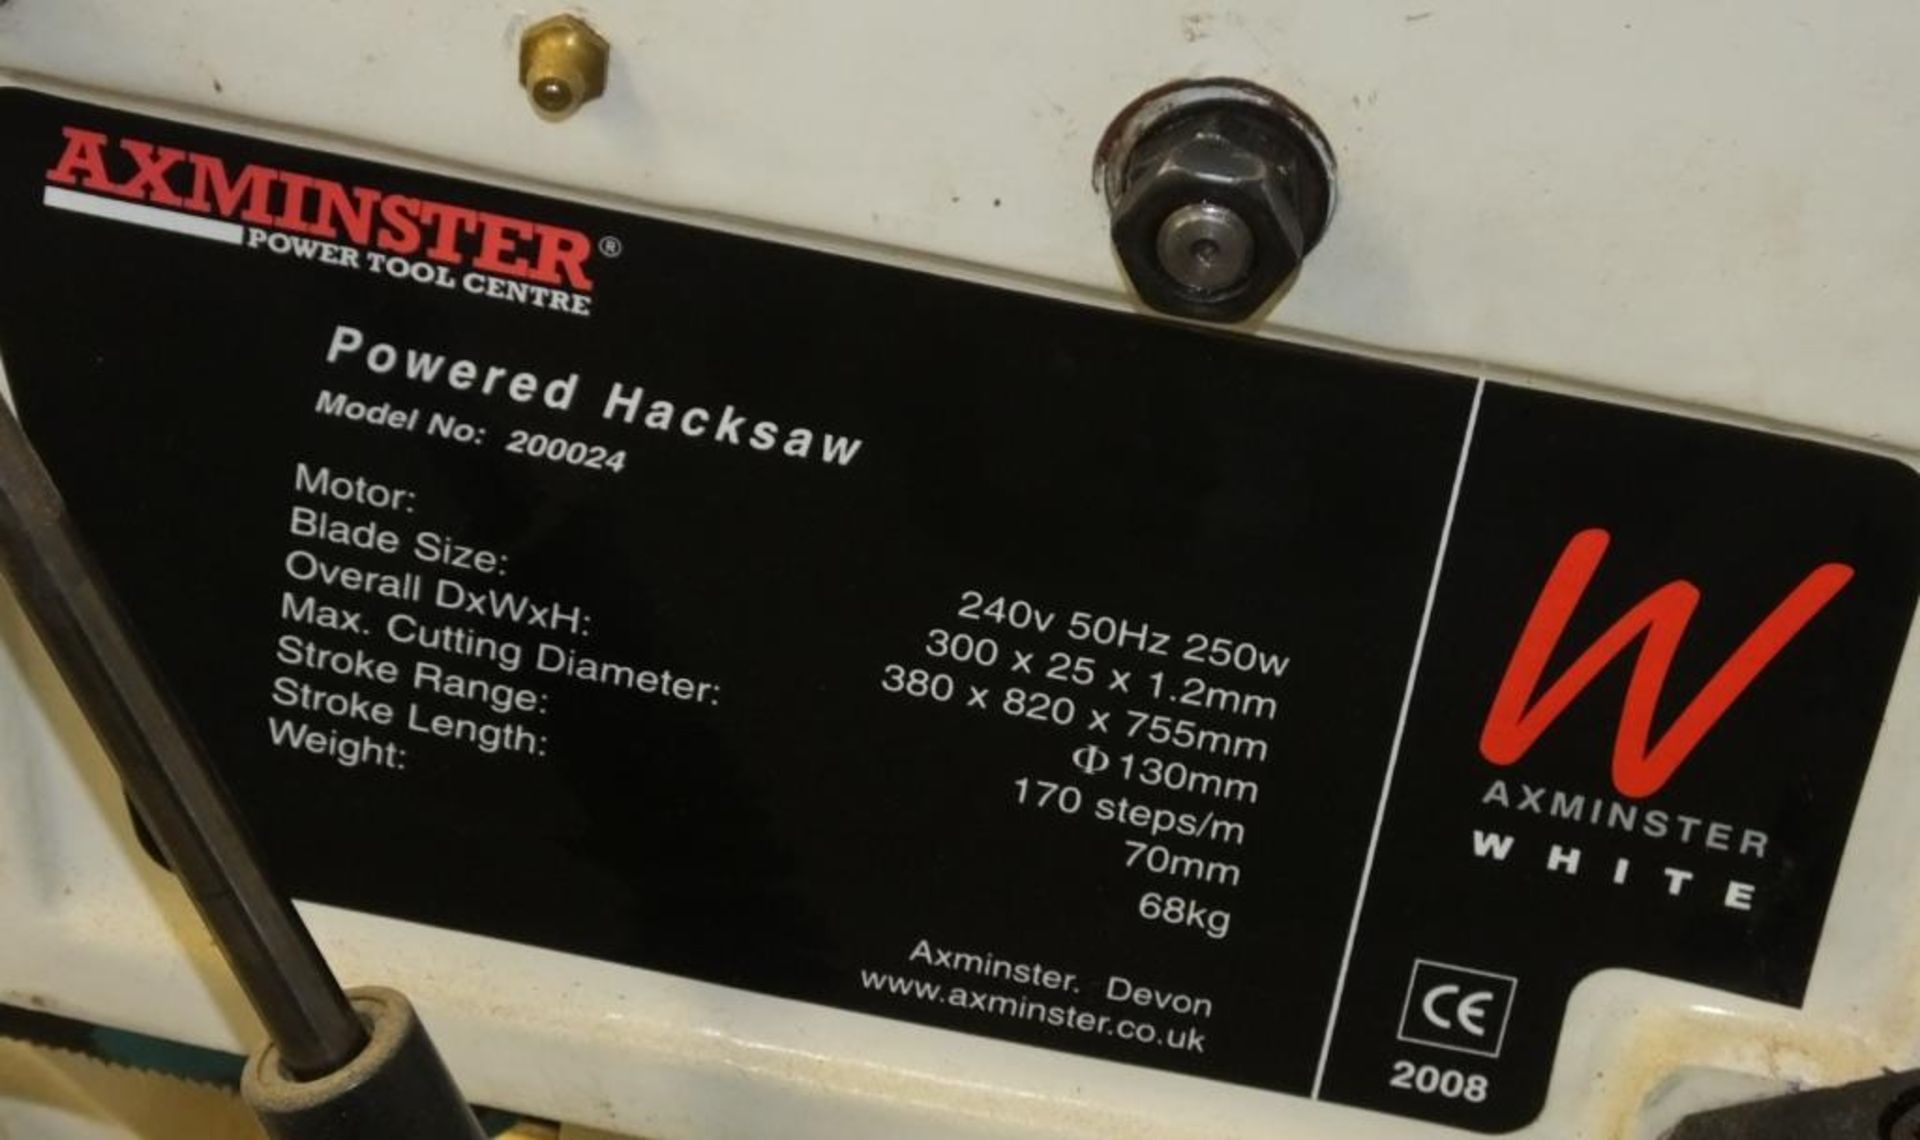 Axminster Powered Hacksaw - 200024 - motor 240V 50hz 250W - blade size 300x25x1.2mm - Image 3 of 11